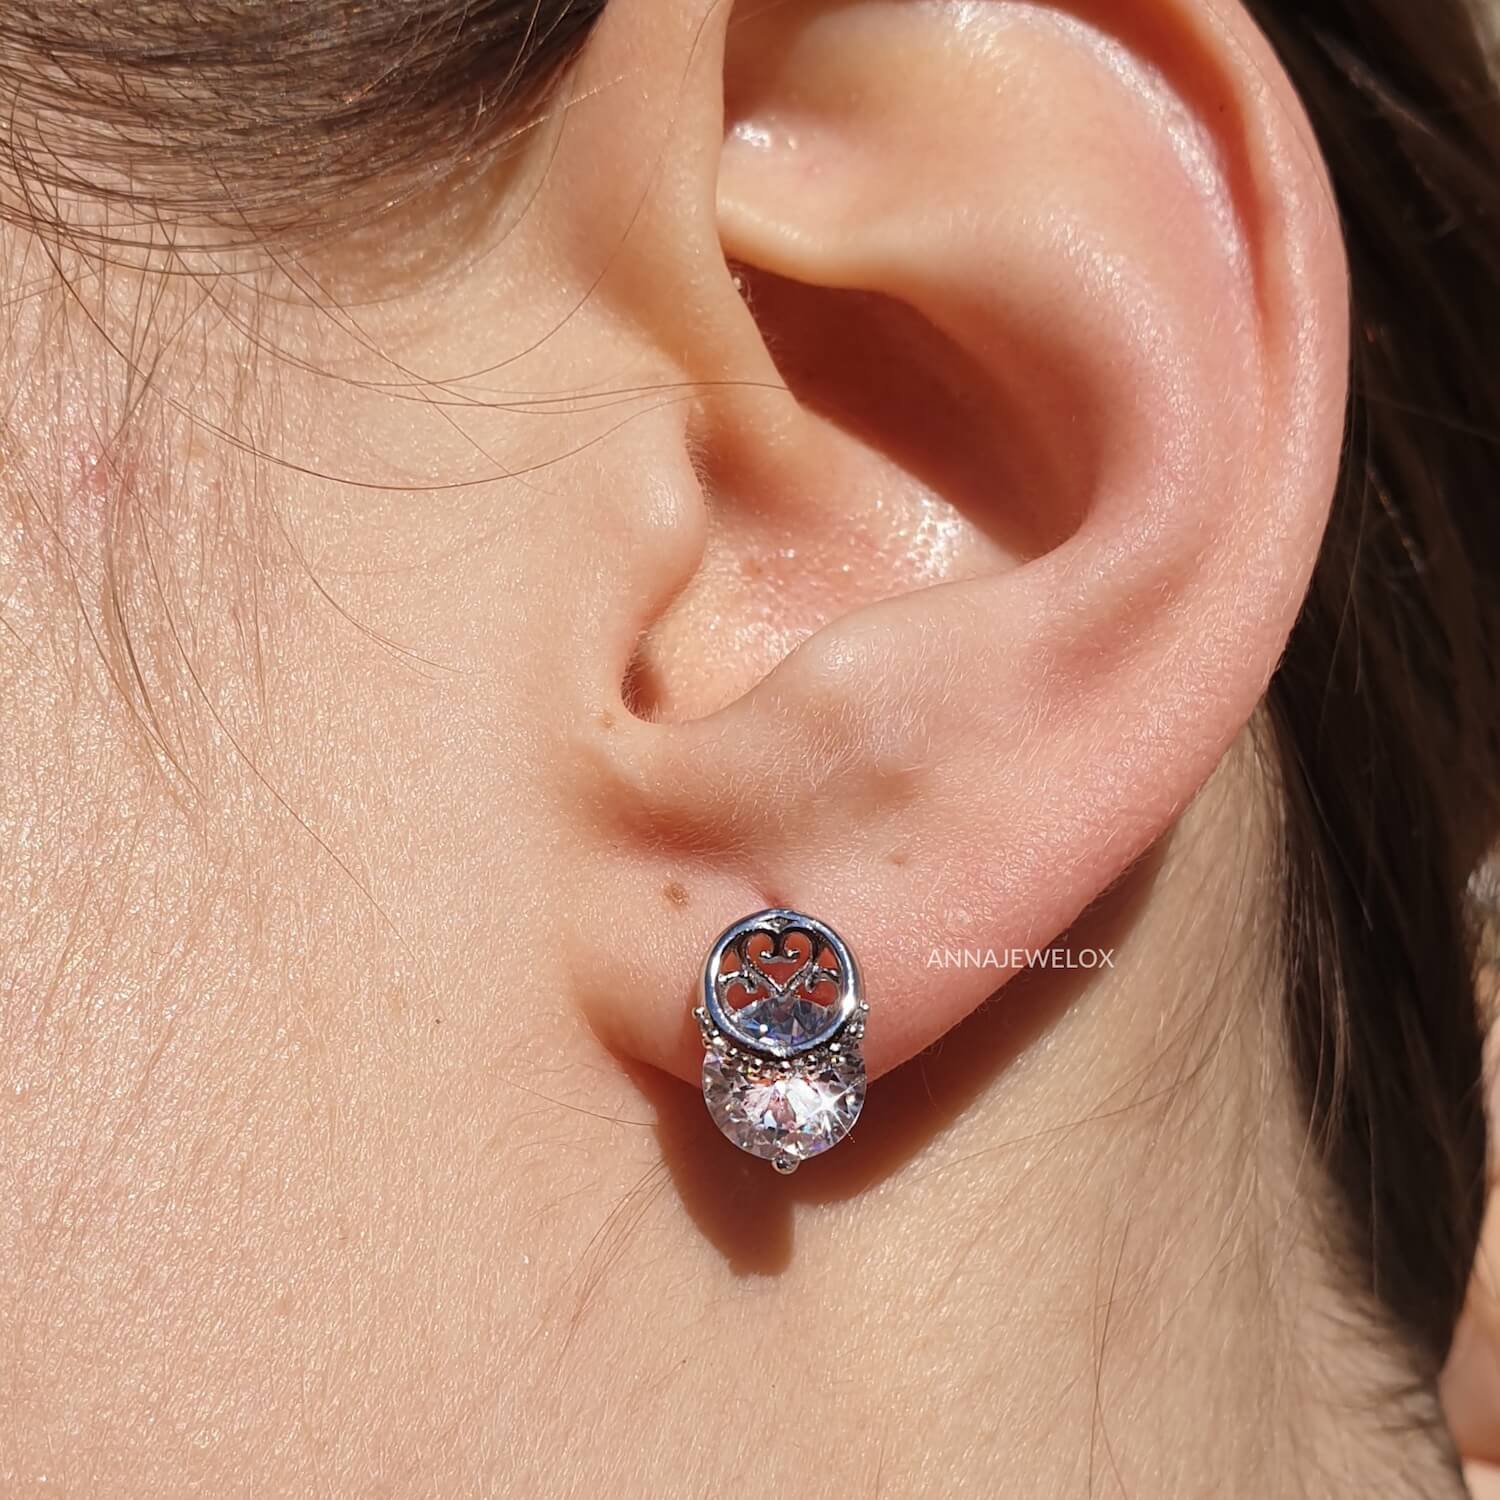 Sparkling Silver Diamante Crystal Stud Earrings - AnnaJewelBox